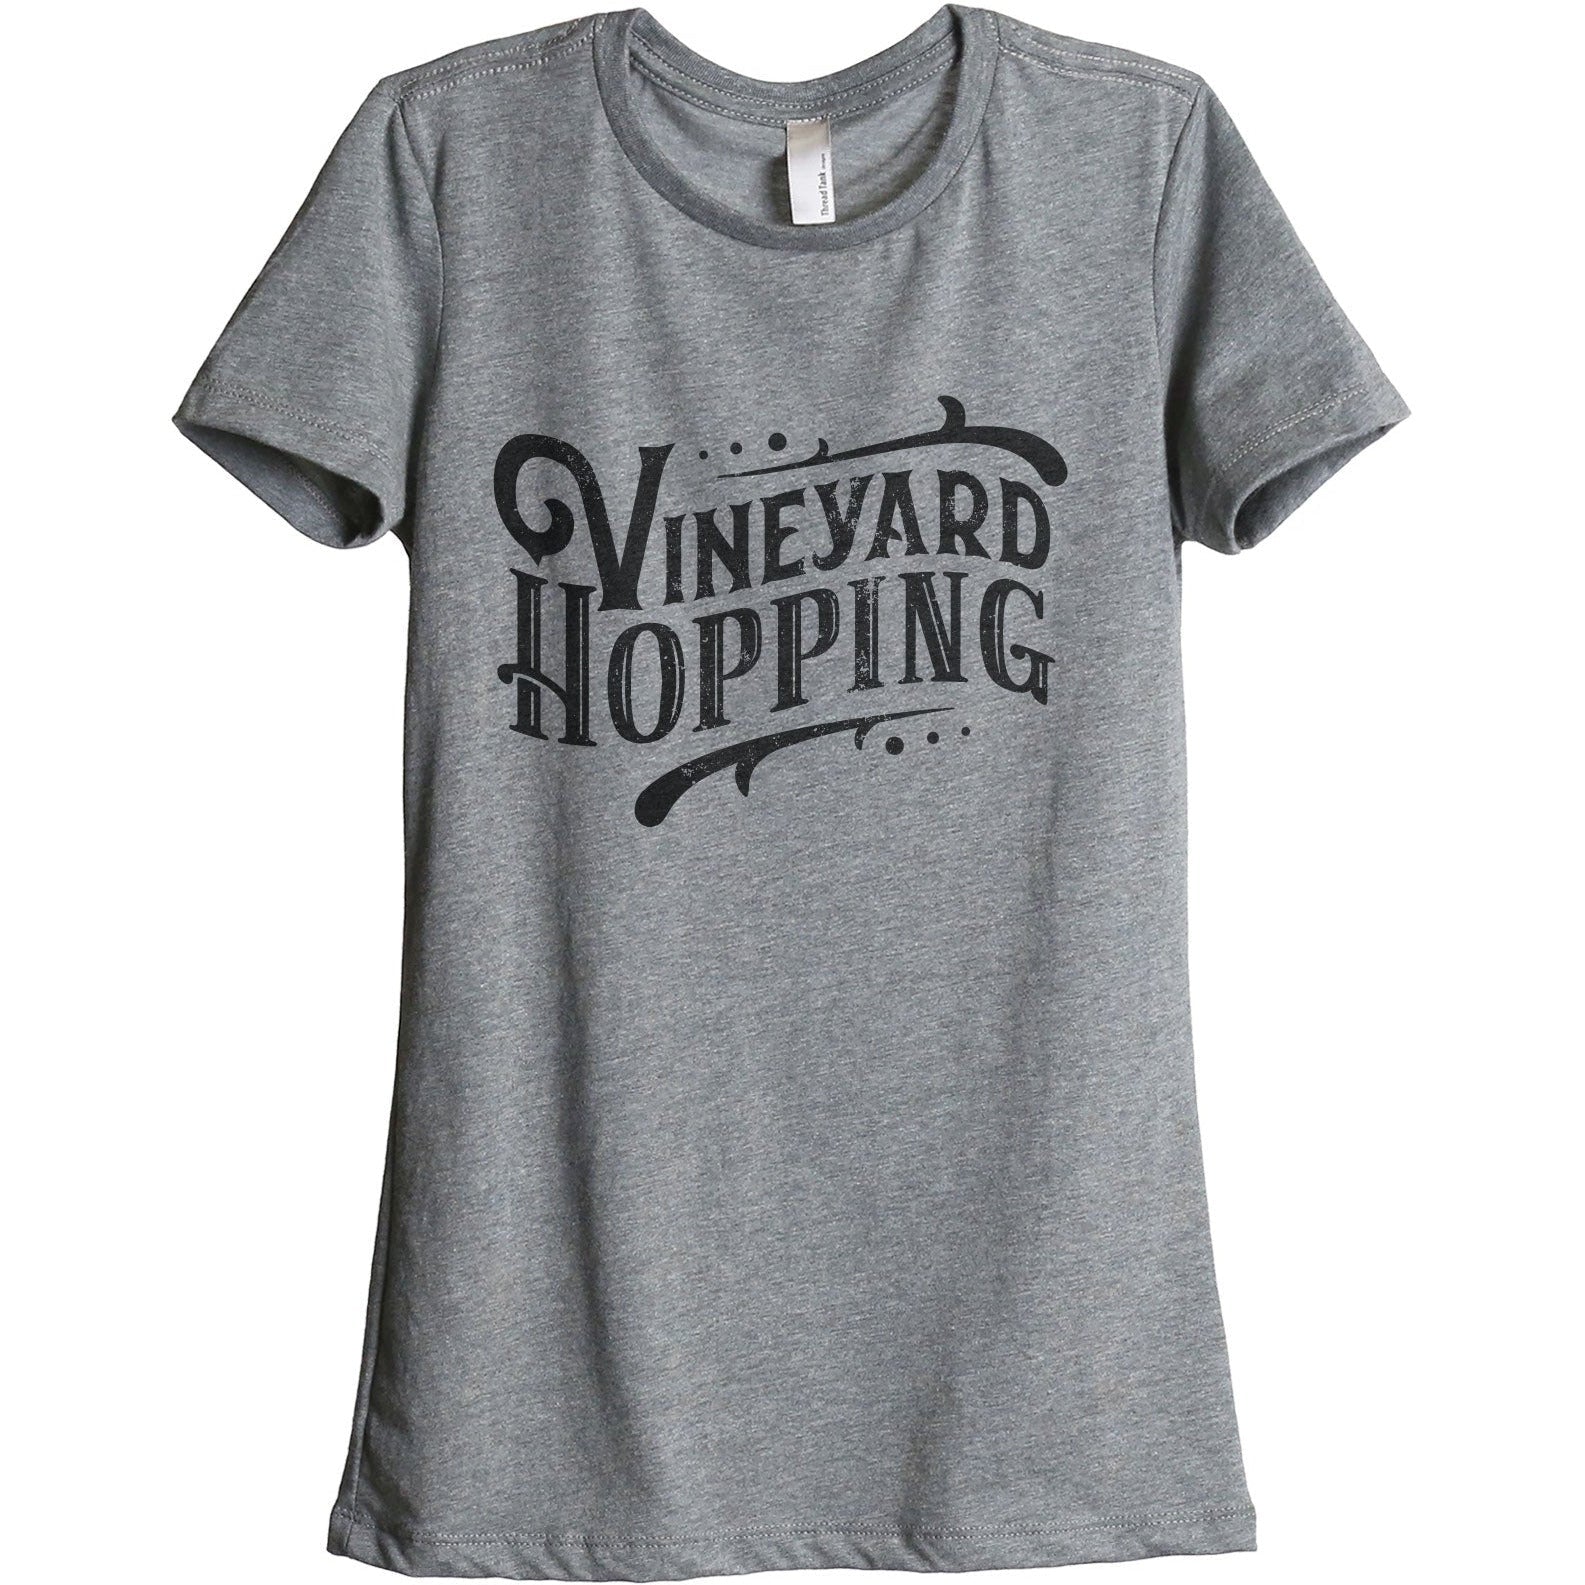 Vineyard Hopping - Stories You Can Wear